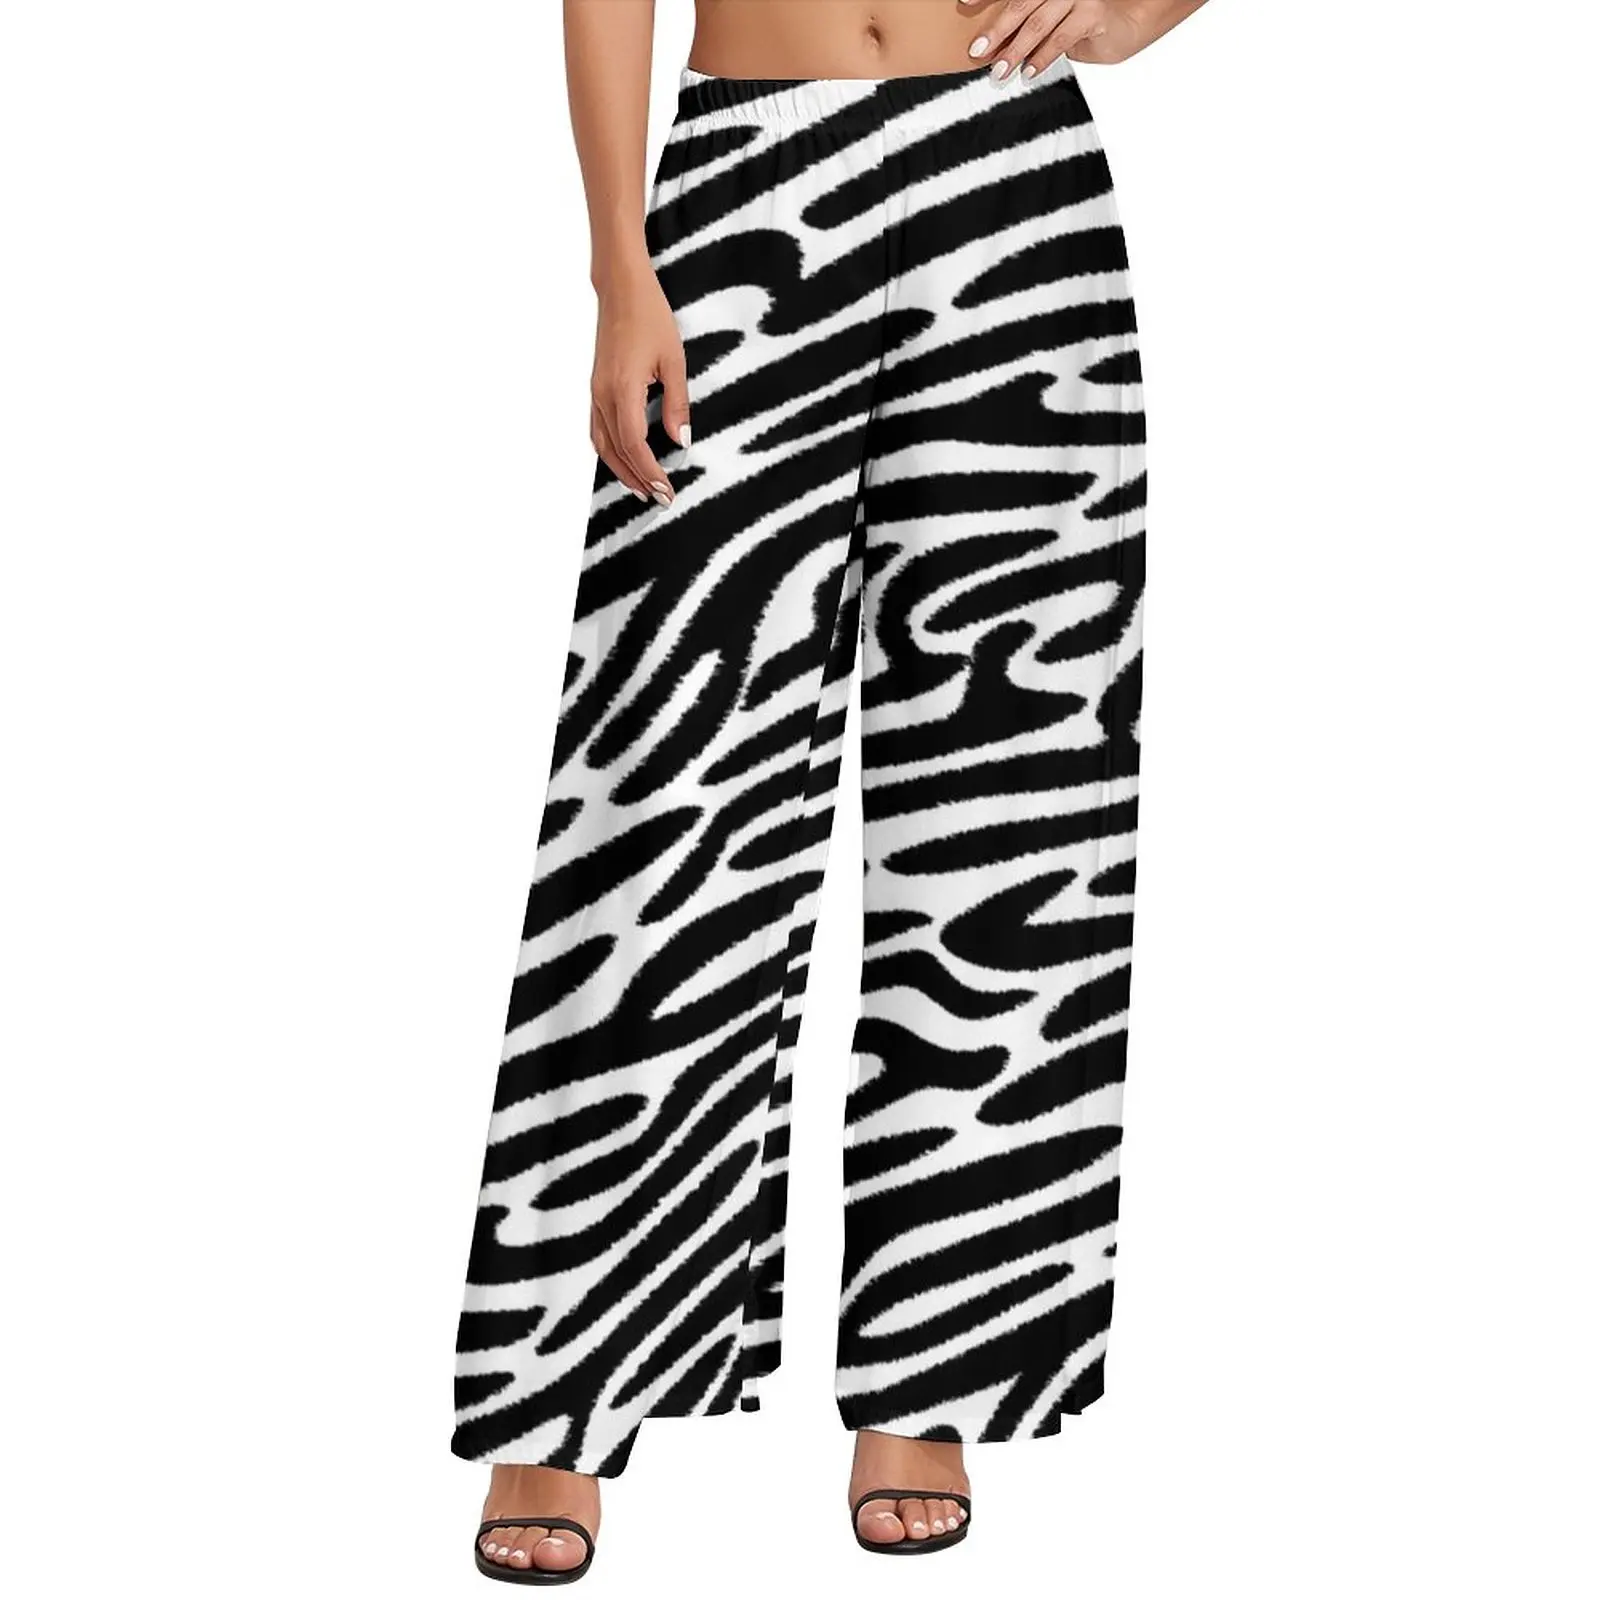 

Black Zebra Stripes Pants High Waisted Big Size Modern Animal Shiny Casual Trousers Beach Print Wide Leg Pants Big Size 5XL